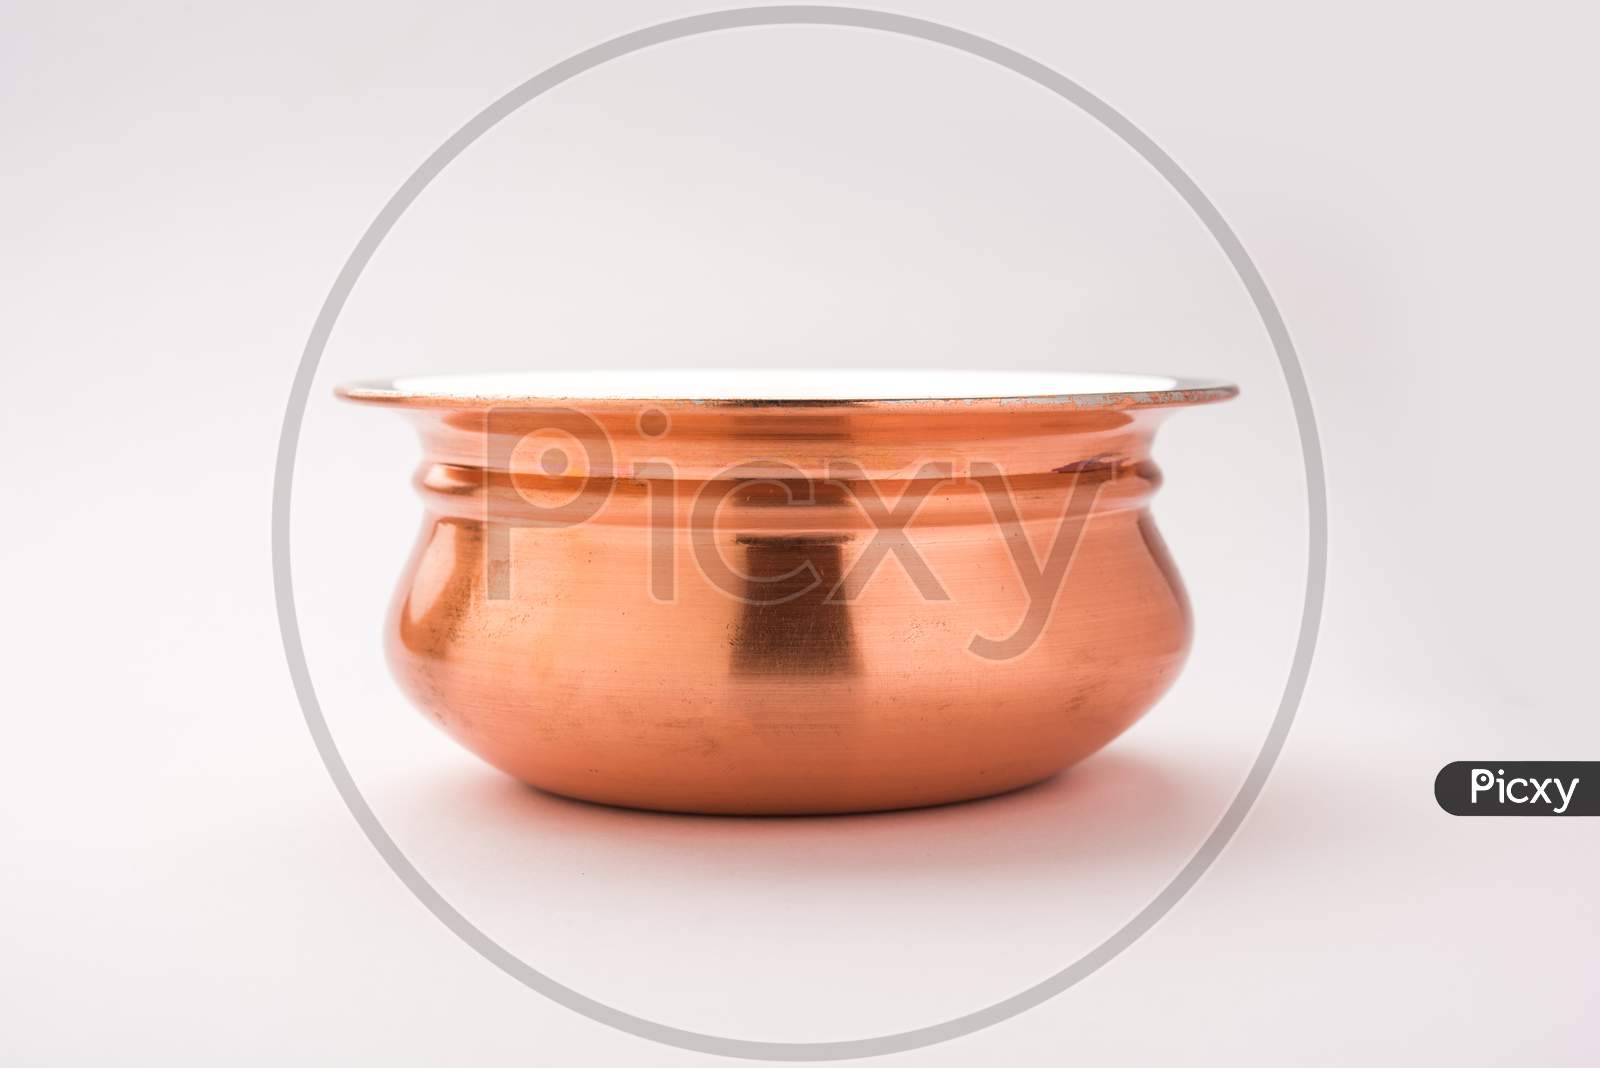 Copper handi / bowl for serving food